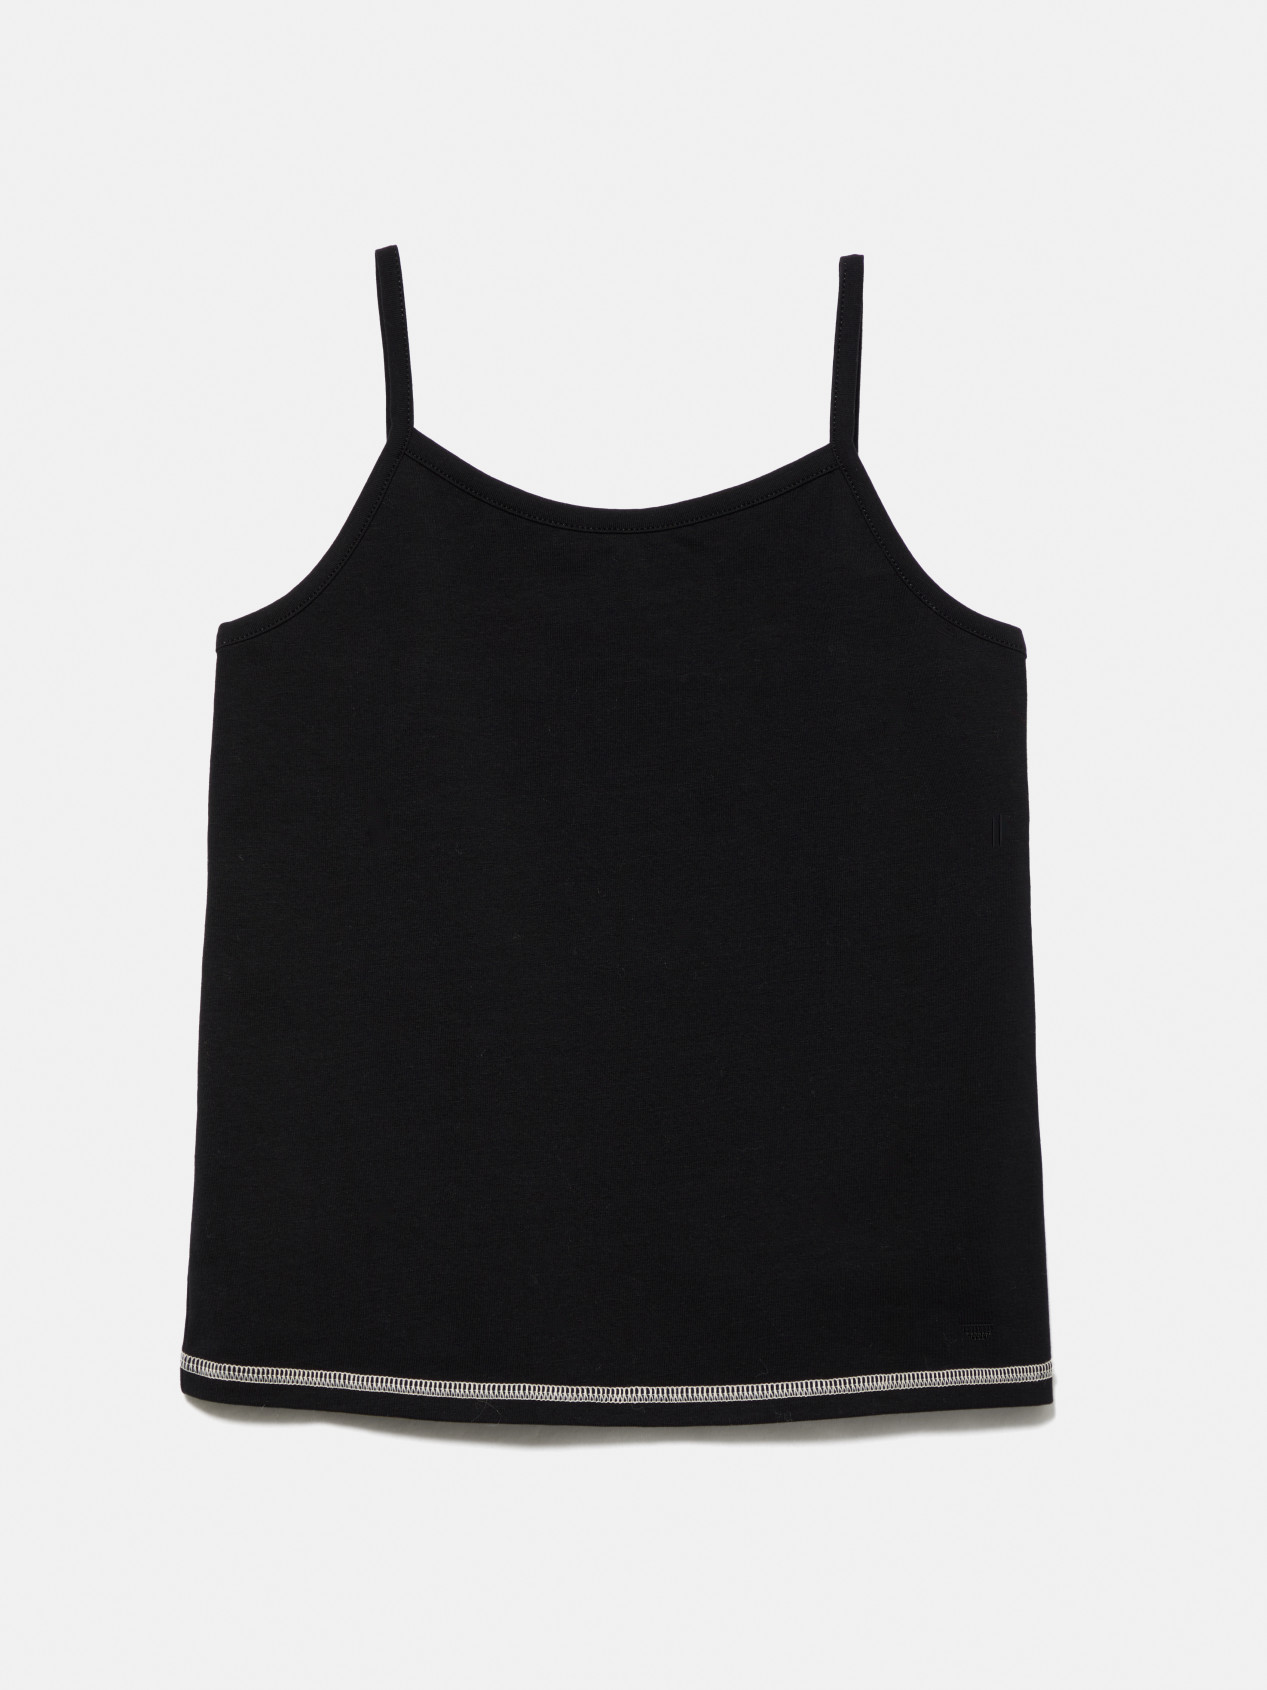 Black Sexy Plain Sheer Cami Spaghetti Strap Women's Tank Tops Camis 